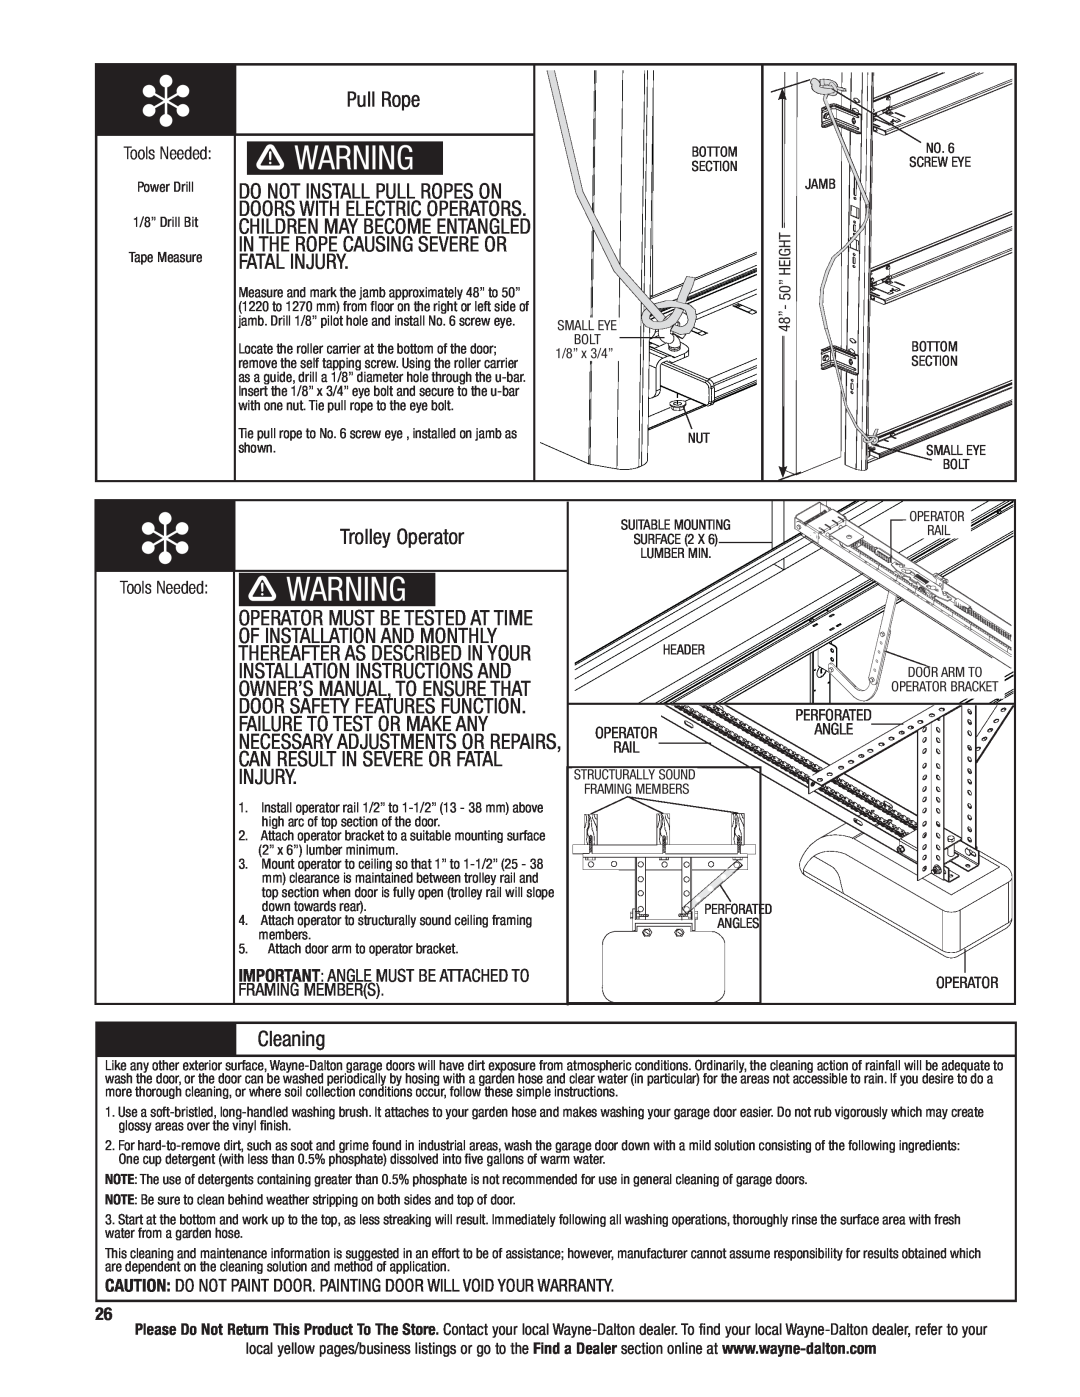 Wayne-Dalton 9300 installation instructions Pull Rope 